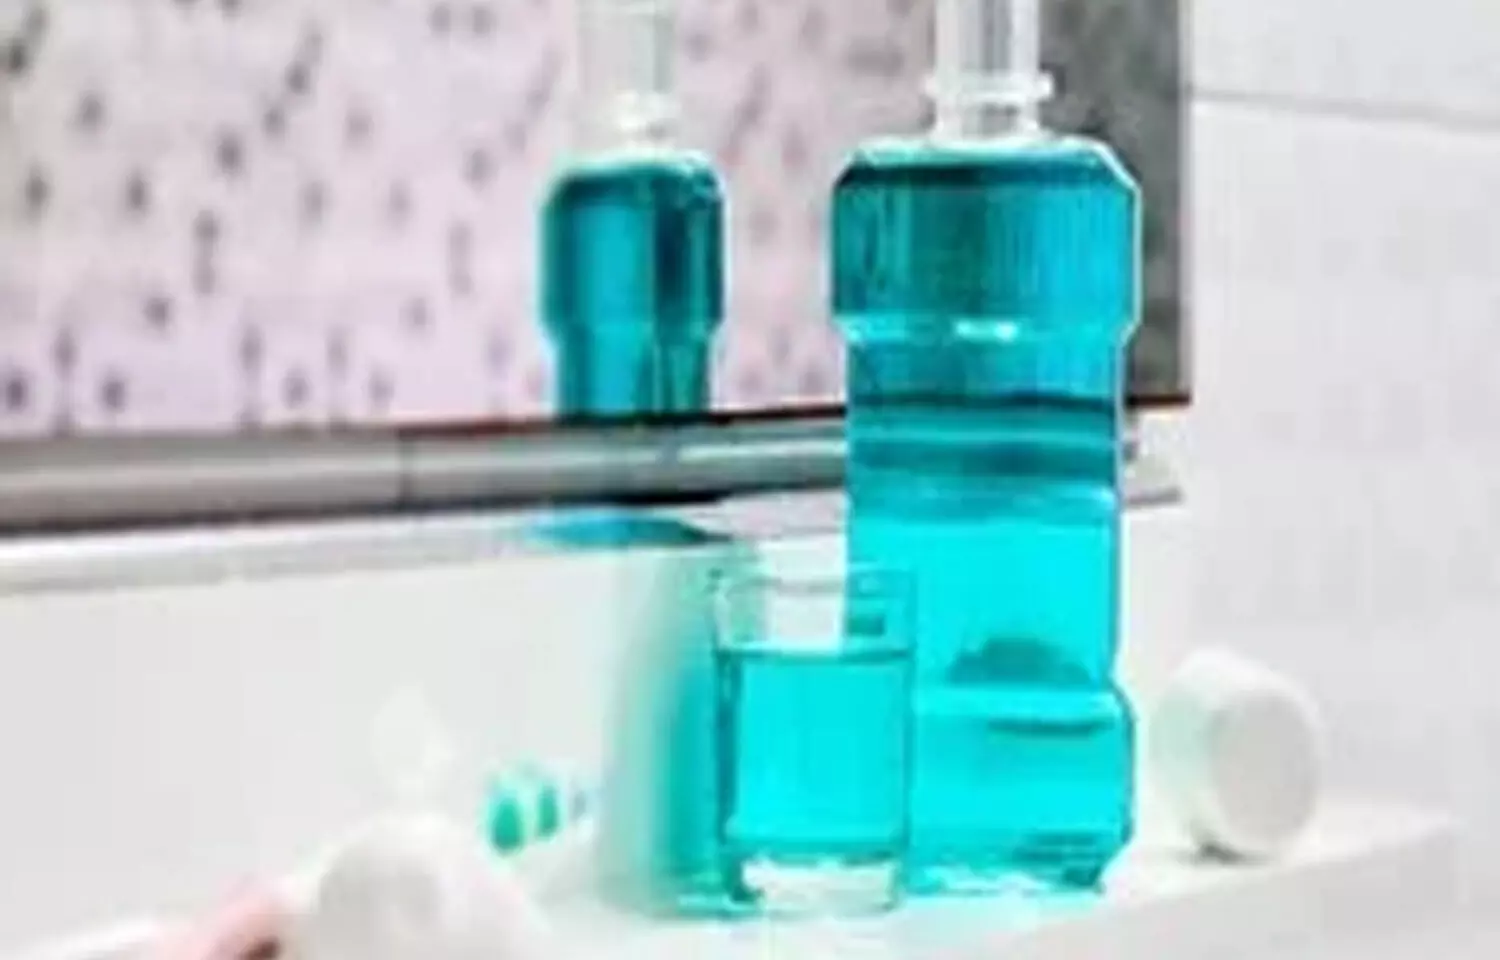 Povidone iodine nasal spray, mouthwash can limit coronavirus spread: JAMA